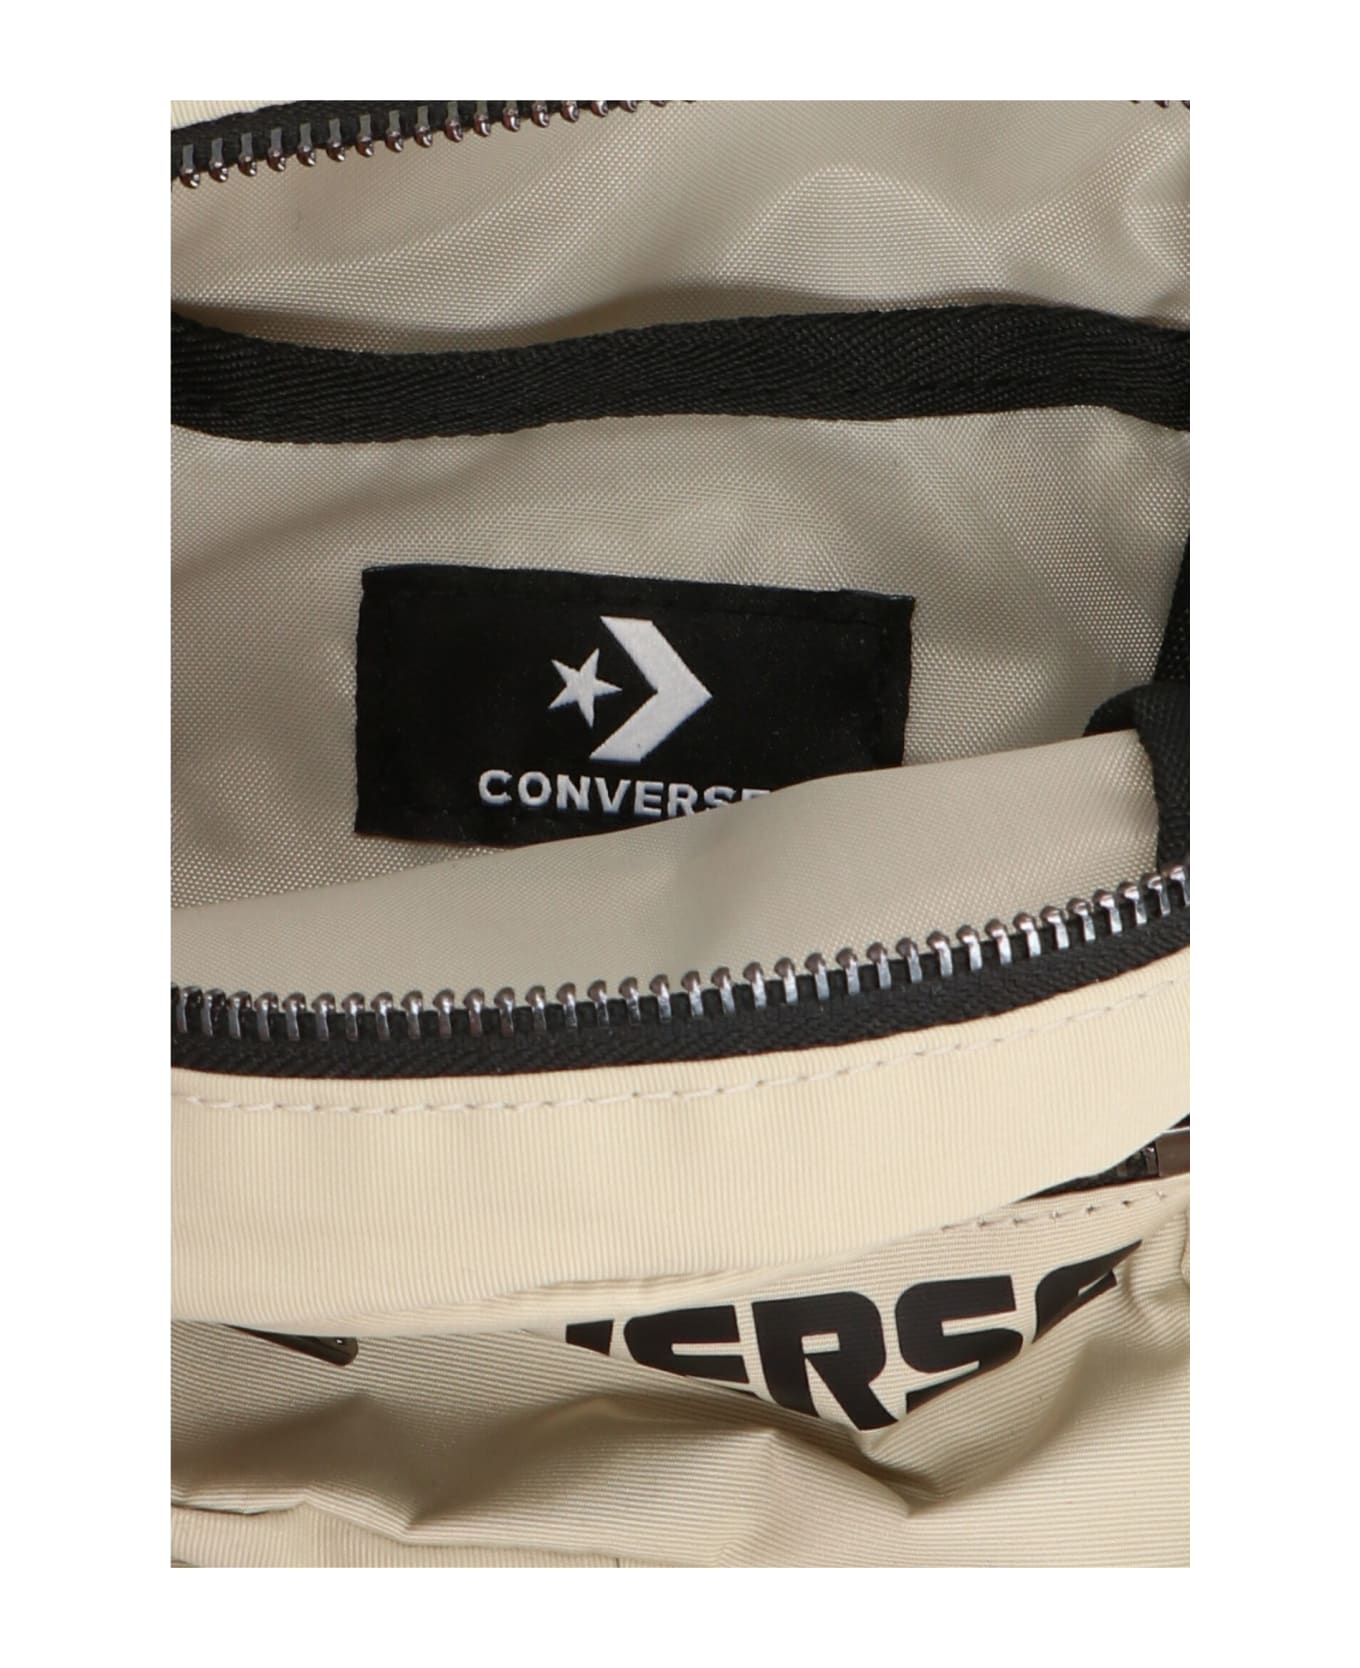 DRKSHDW X Converse Crossbody Bag - Gray